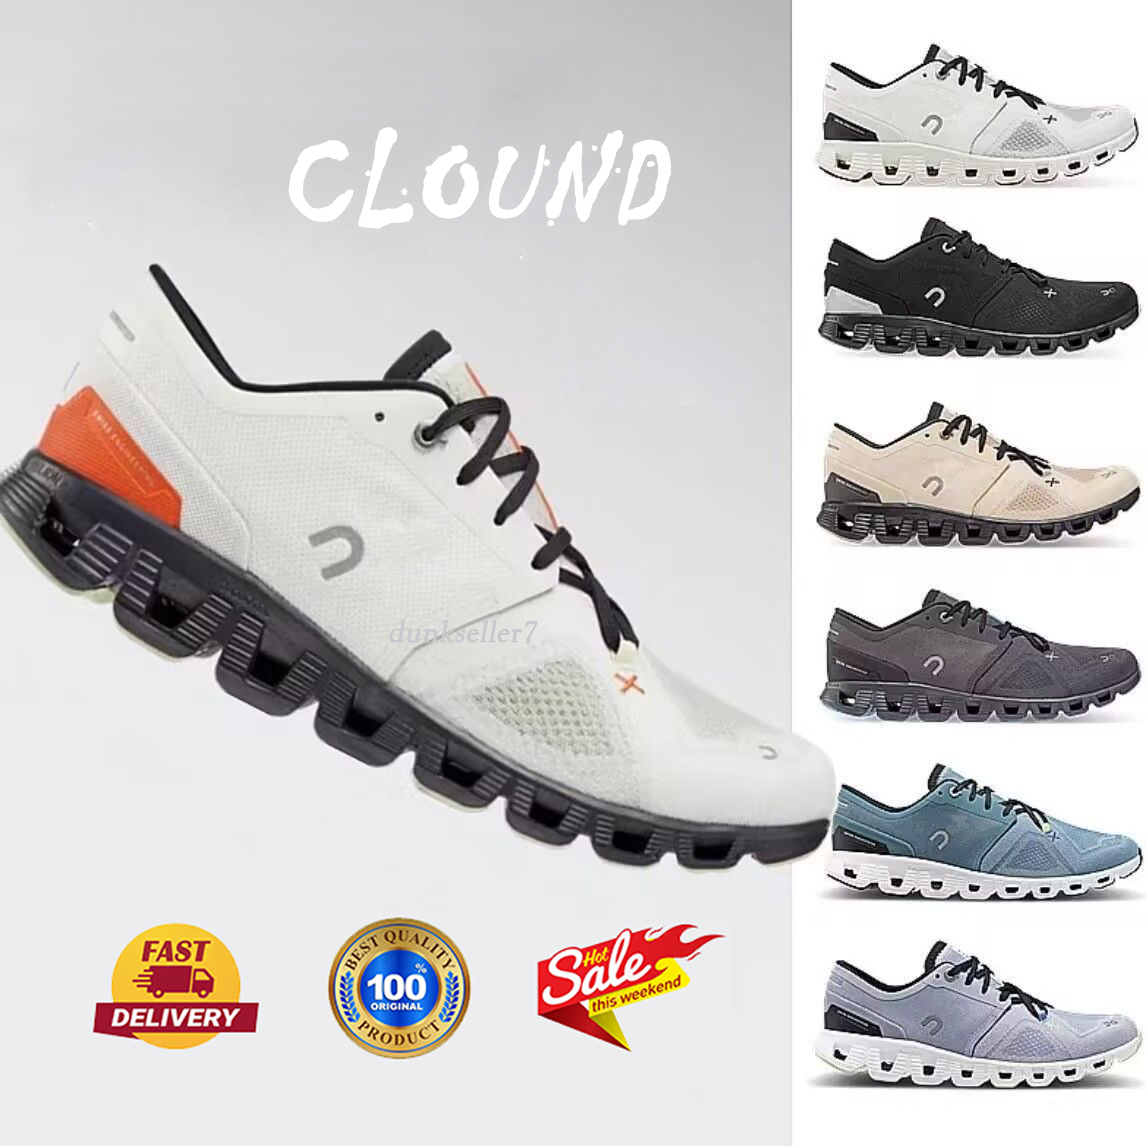 Scarpe firmate Cloud Cloud X 3 Uomo Donna Scarpe da ginnastica comode da corsa traspiranti ultraleggere antiscivolo per esterni